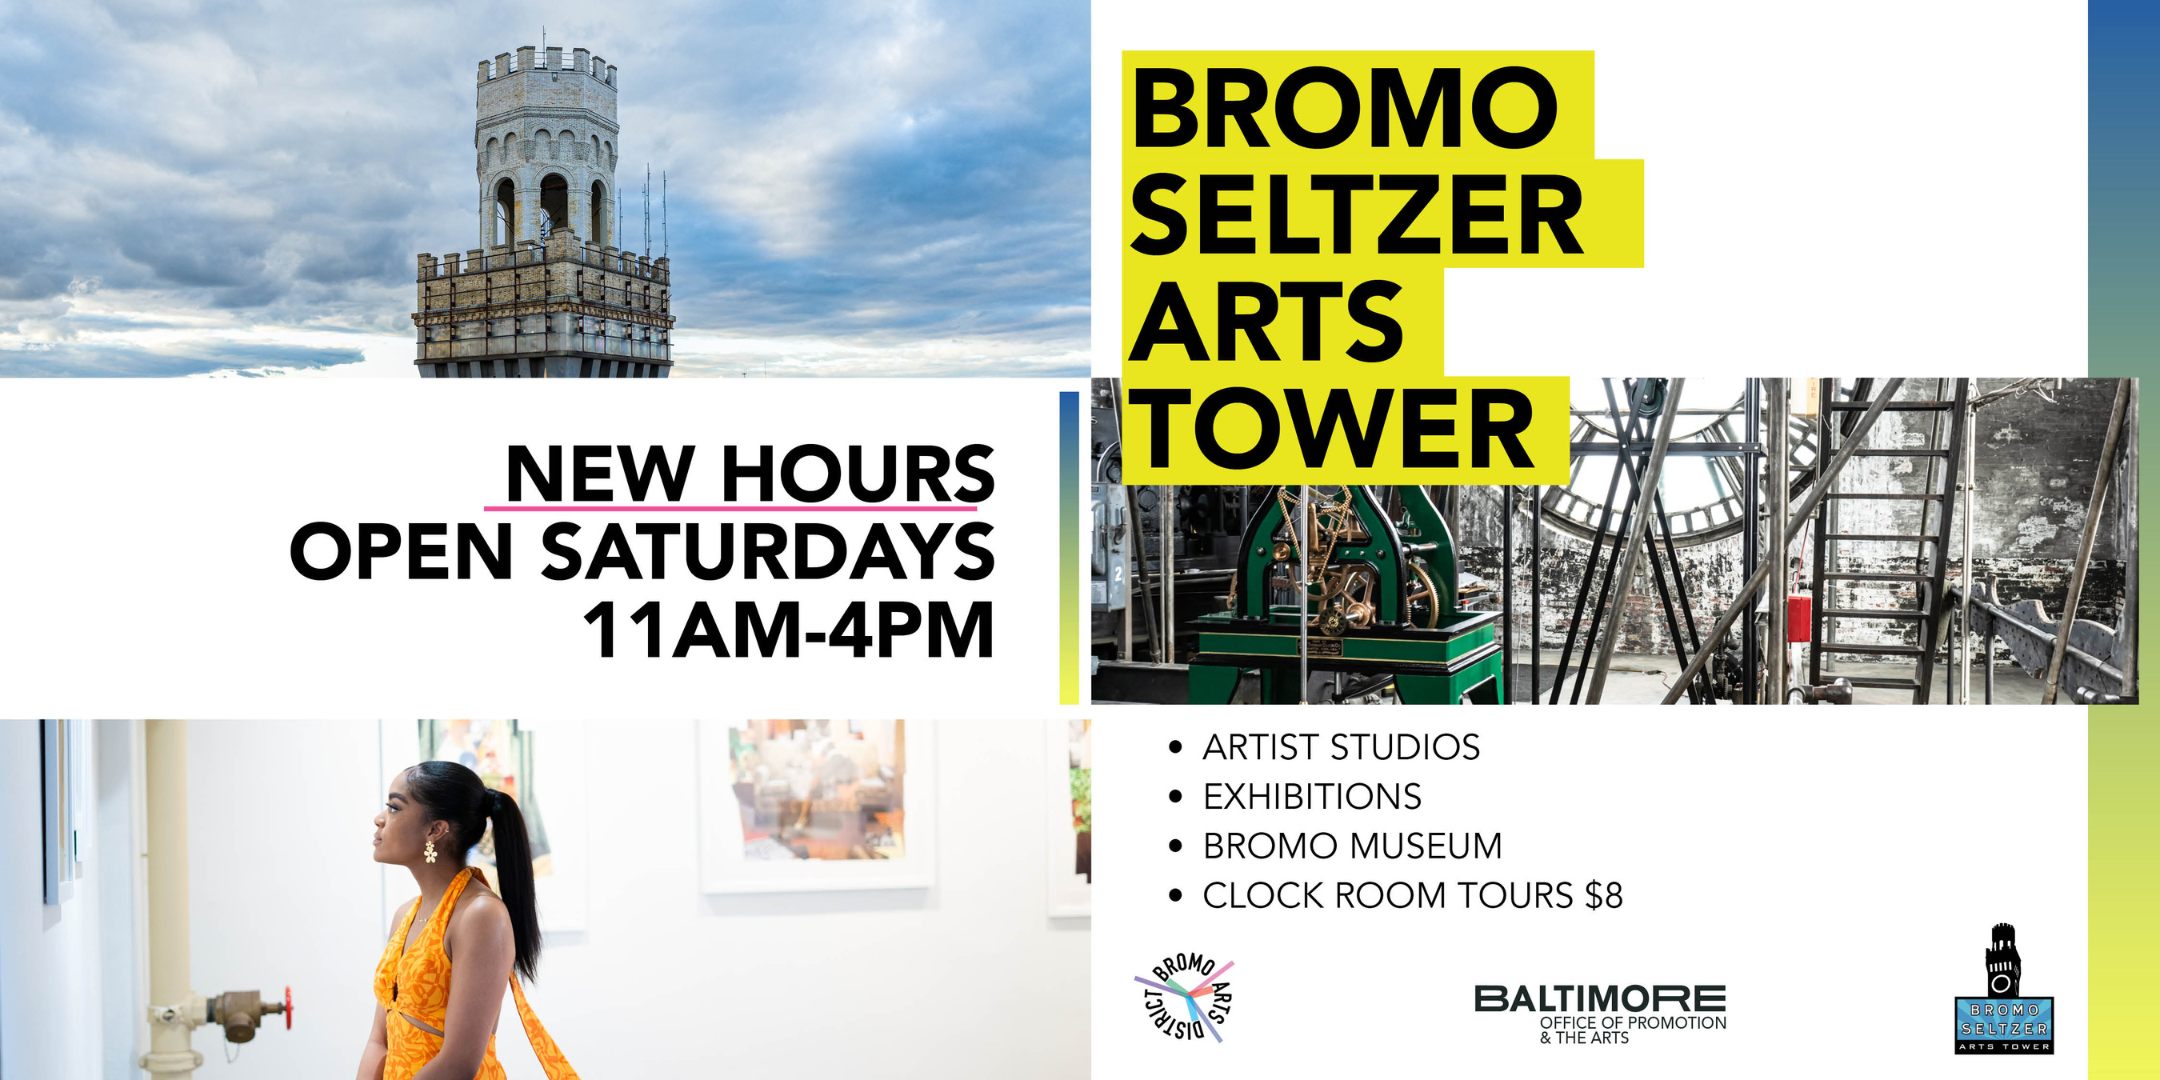 Bromo Seltzer Arts Tower Public Access